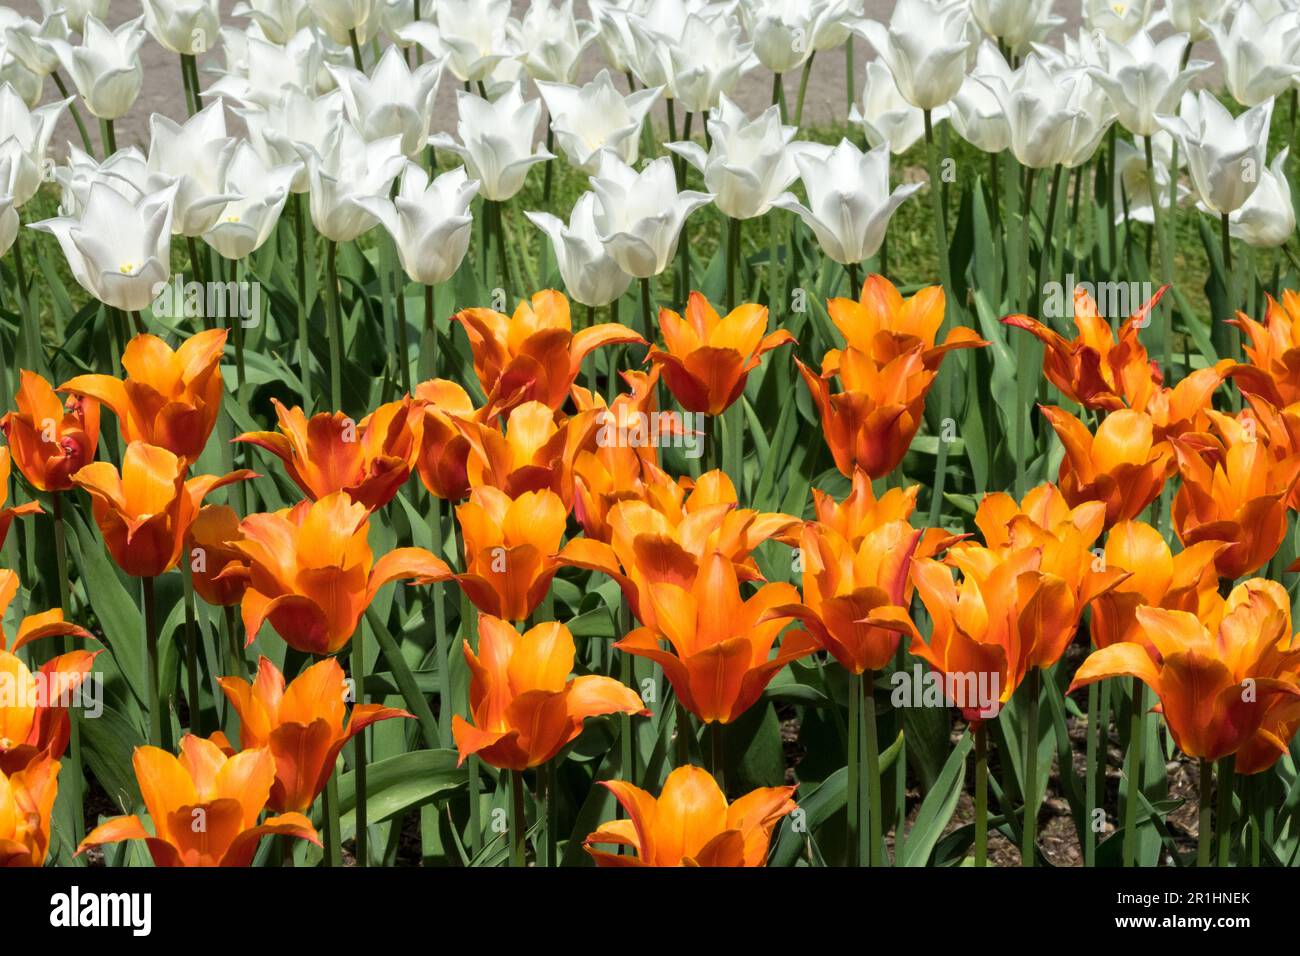 Tulipe à fleurs de nénuphars 'Ballerina' cultivar orange tulipe, exposition, jardin de fleurs, Tulipa 'Ballerina' Tulipa 'White Triumphator' Orange Tulips blancs Banque D'Images